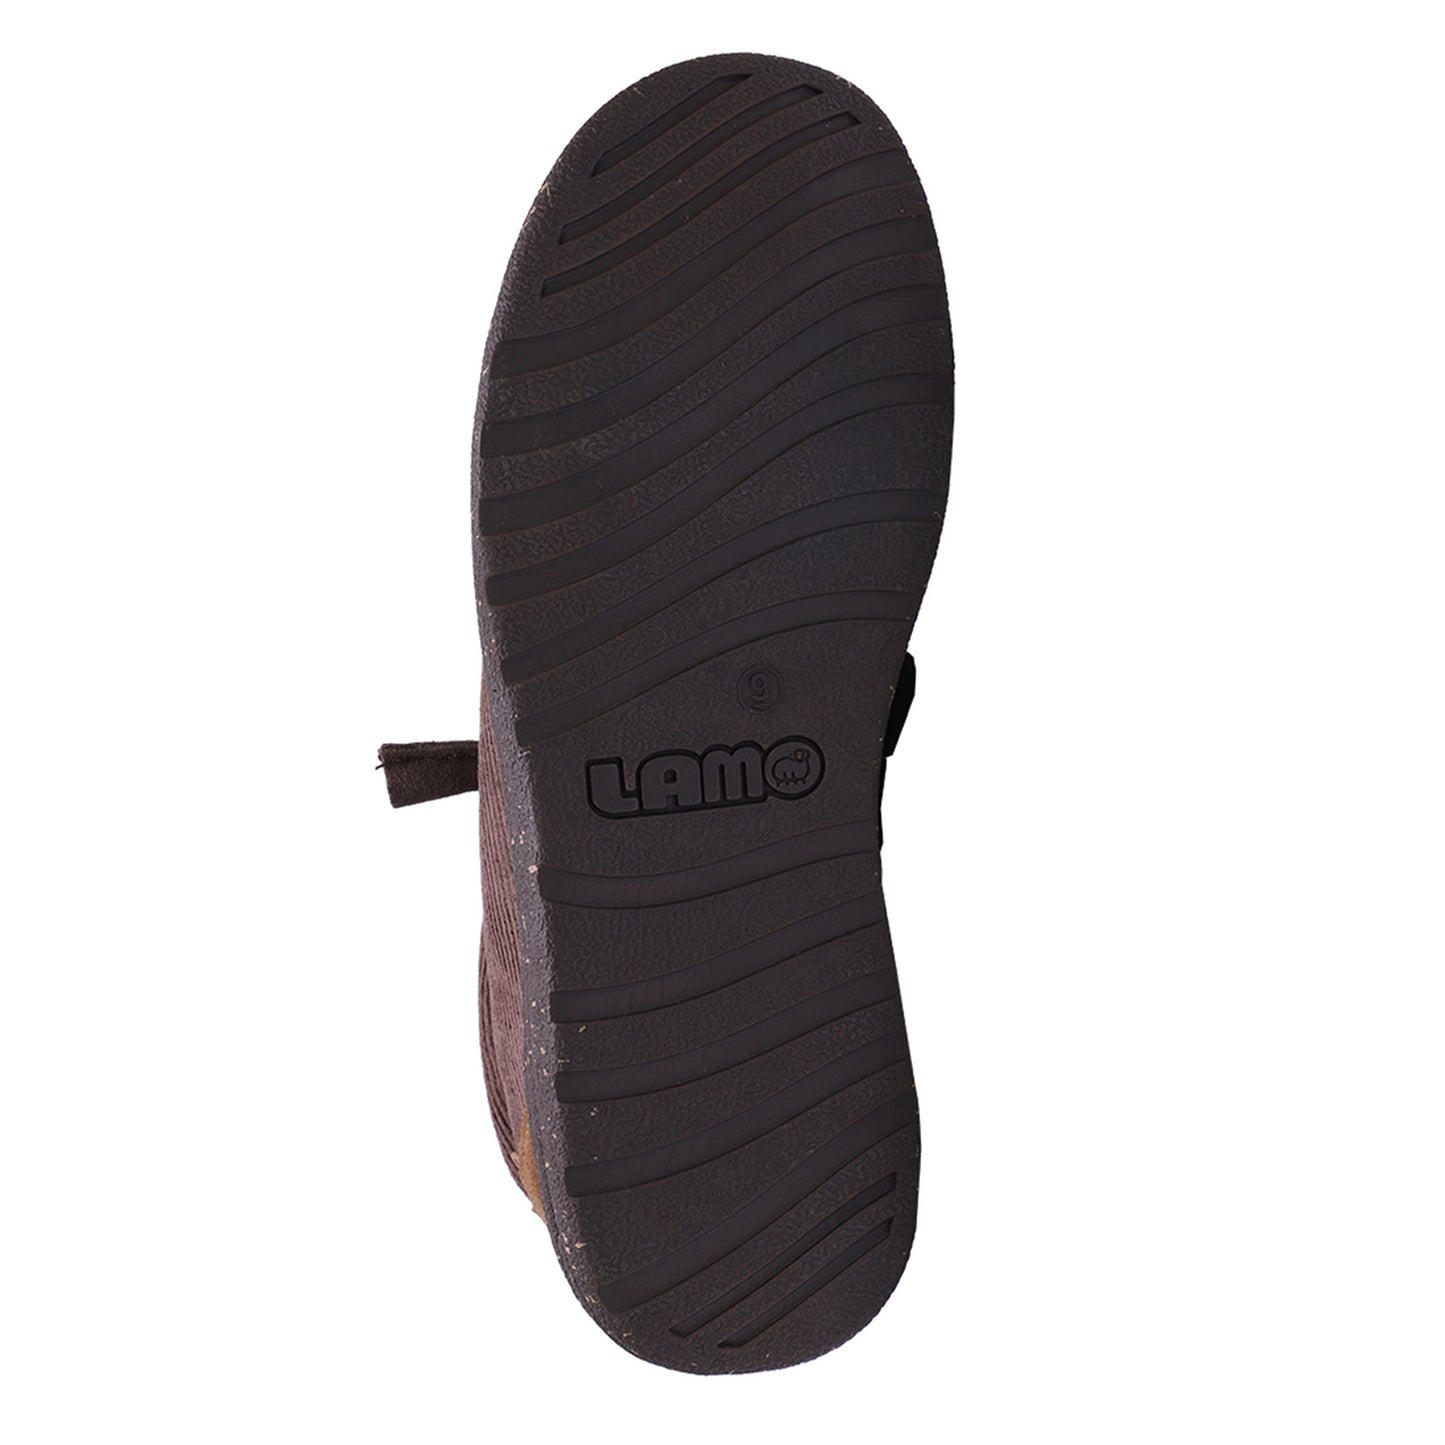 Peltz Shoes  Men's Lamo Paul Slip-On CHOCOLATE CORD EM2035-CHCC